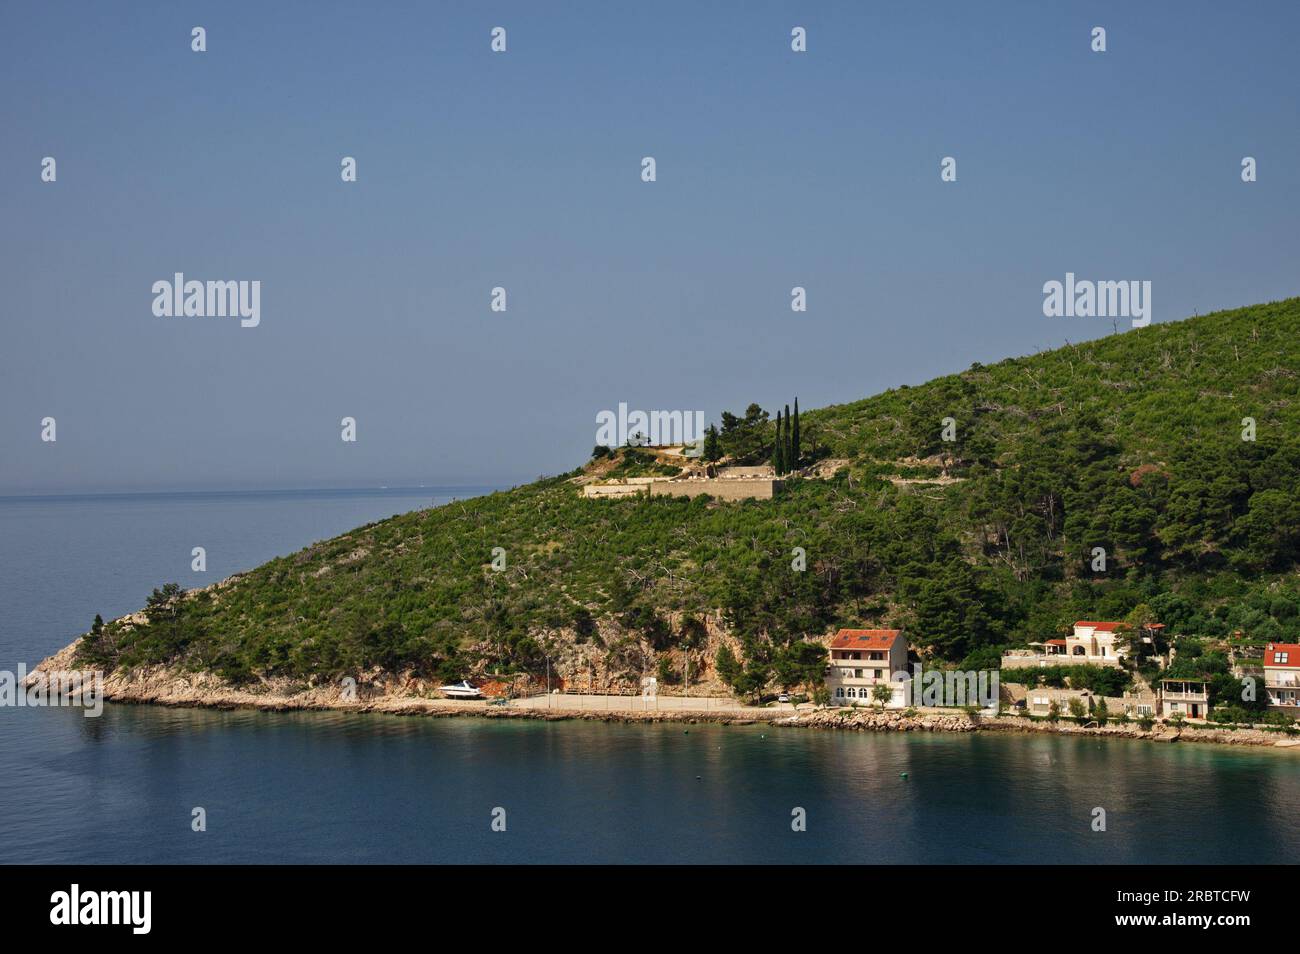 Panorama of Trstenik, Croatia on Peljesac peninsula from the top of a hill Stock Photo